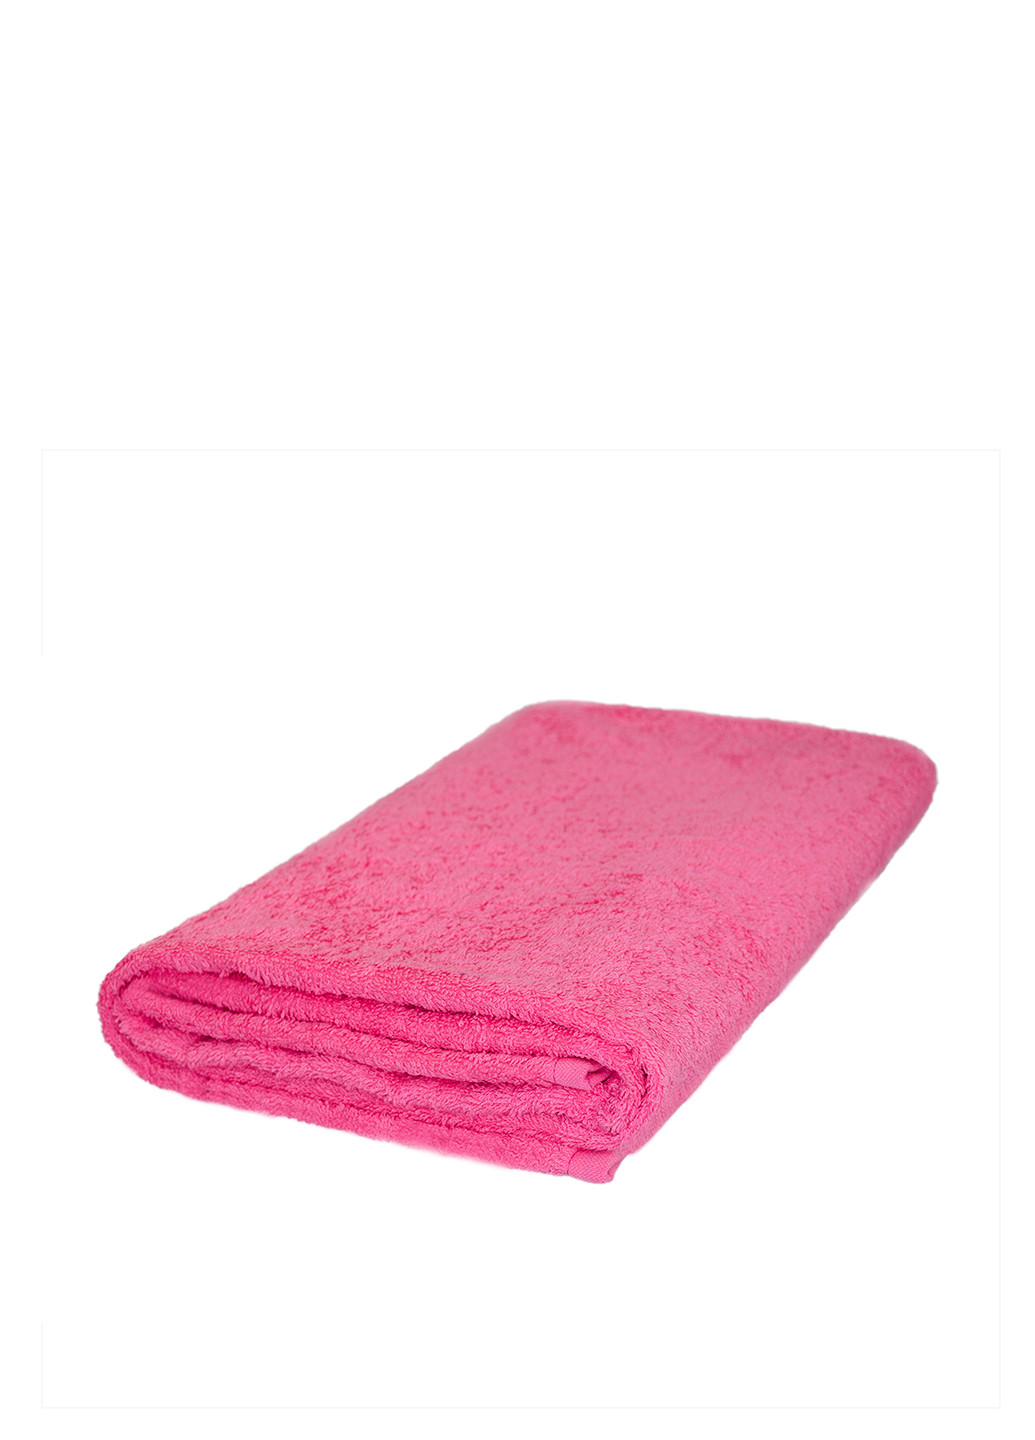 No Brand полотенце, 70х140 см однотонный розовый производство - Туркменистан